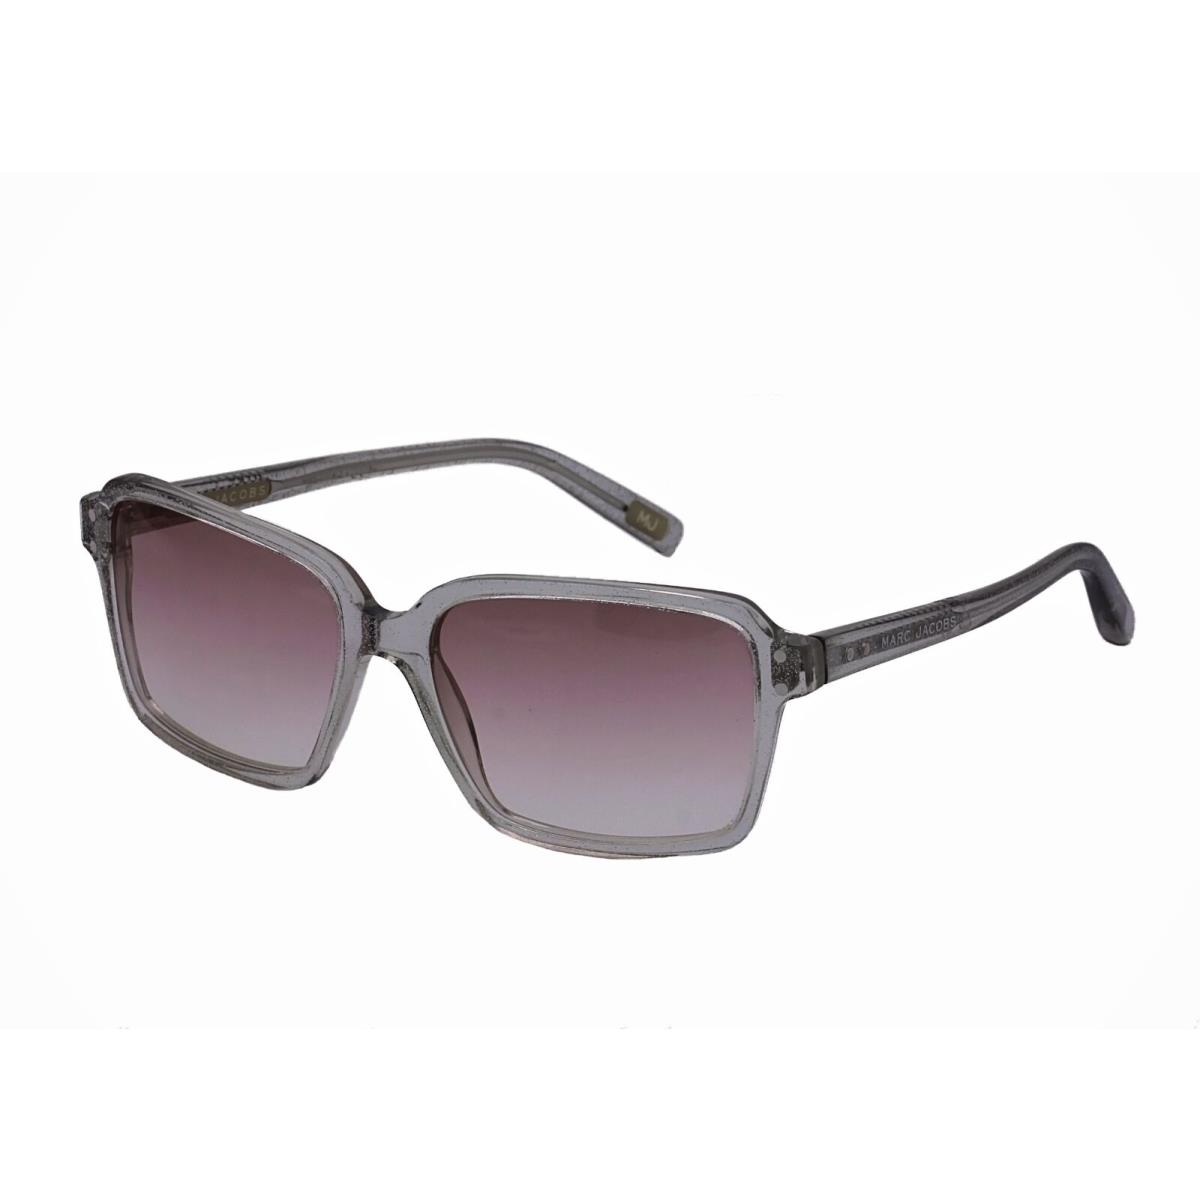 Marc Jacobs sunglasses  - Grey Glitter Frame, Pink Lens